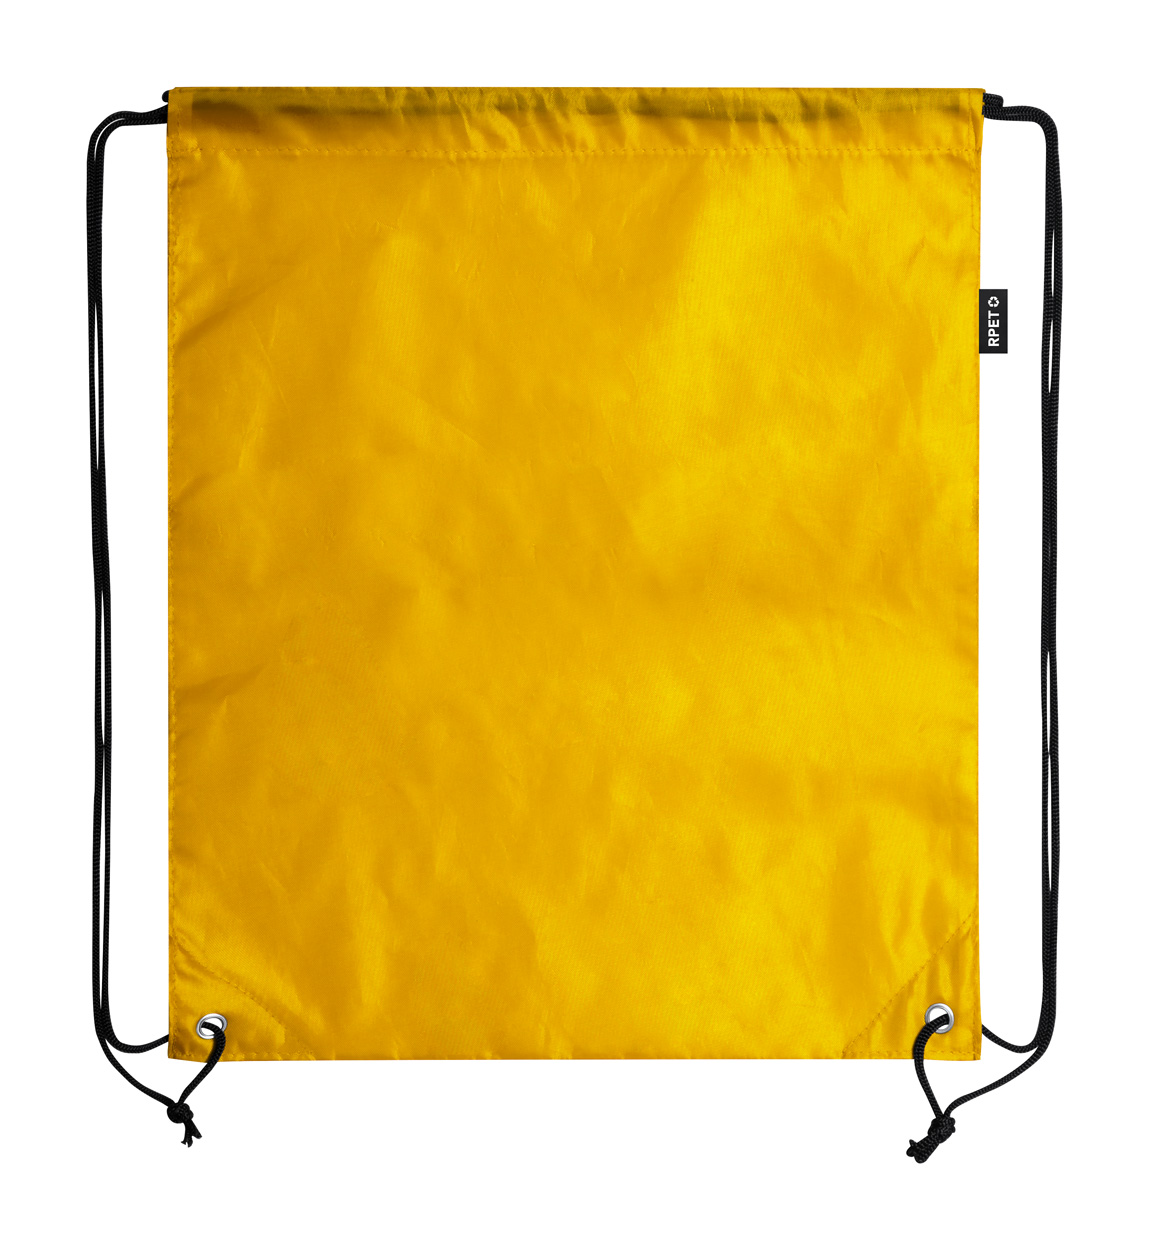 Lambur RPET drawstring bag - yellow